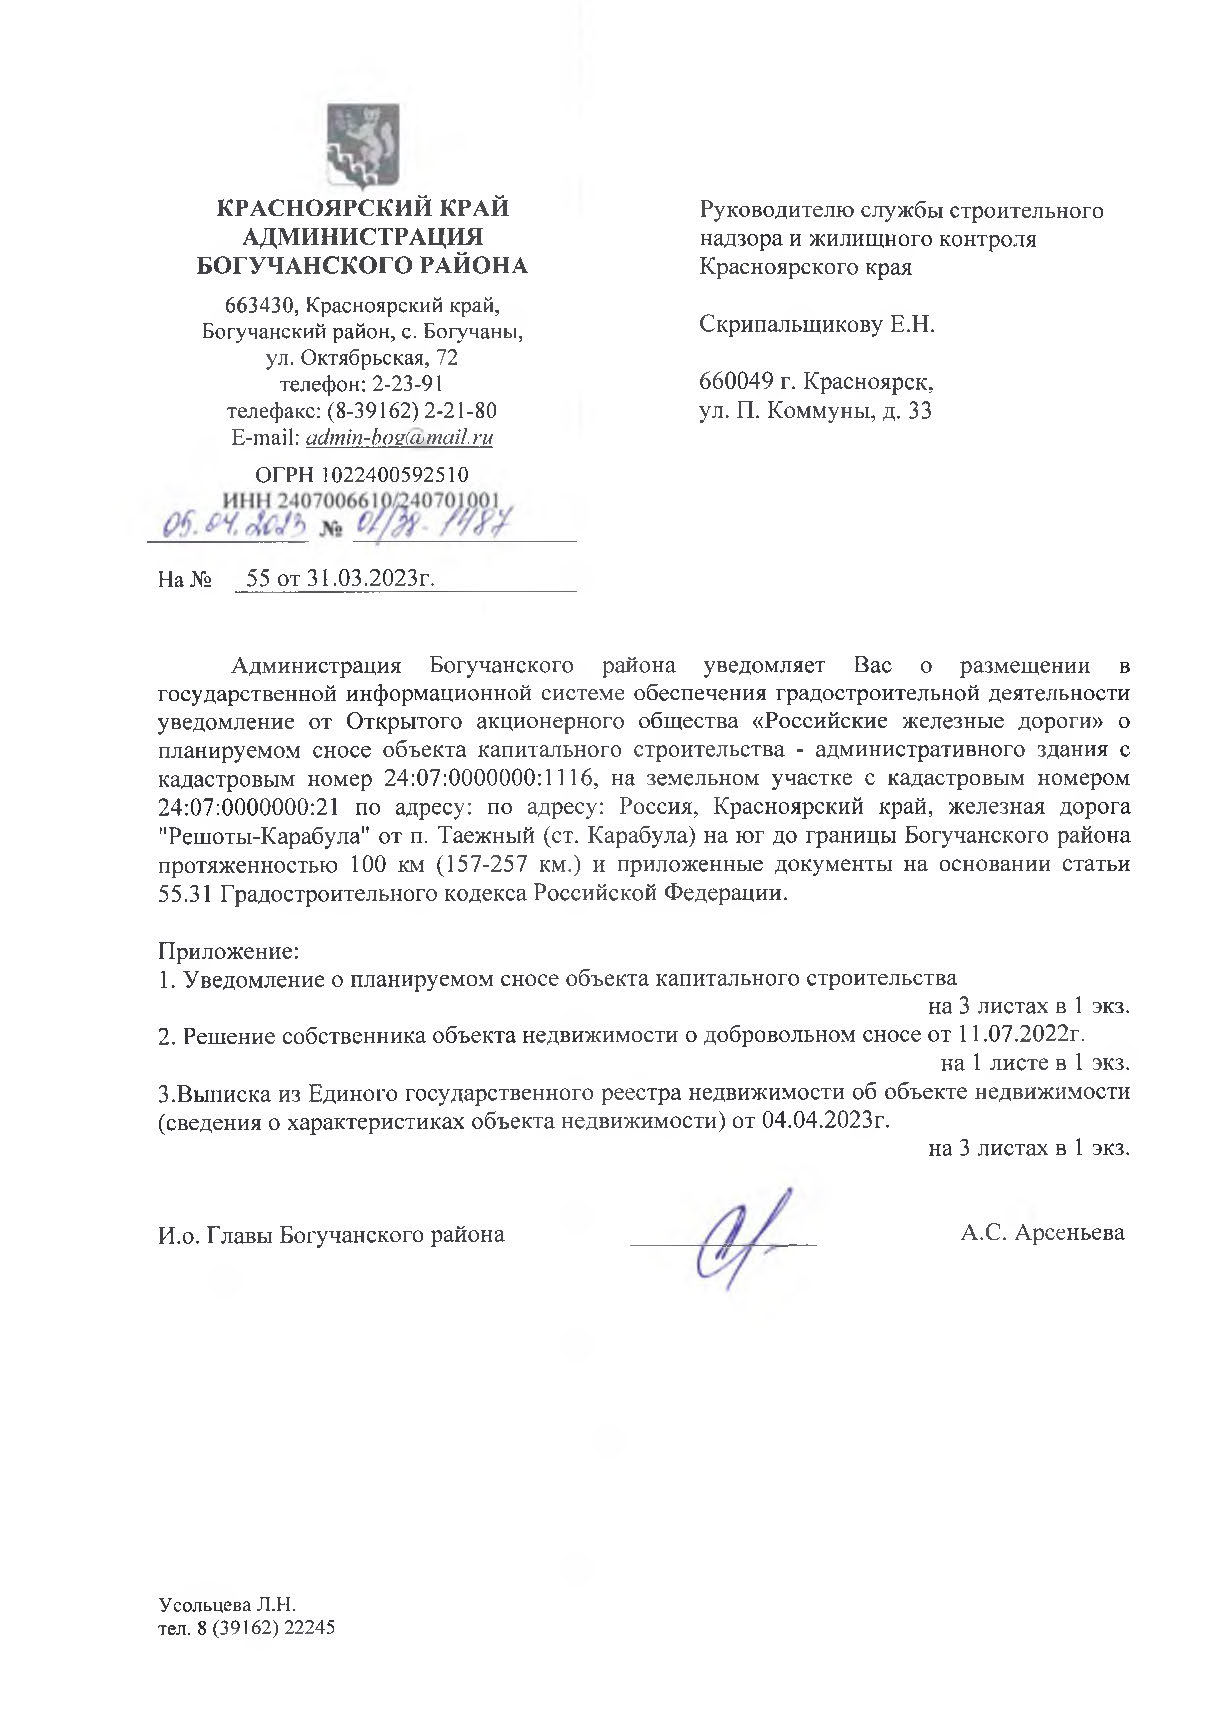 О планируемом сносе ОКС (административное здание) (05.04.23).